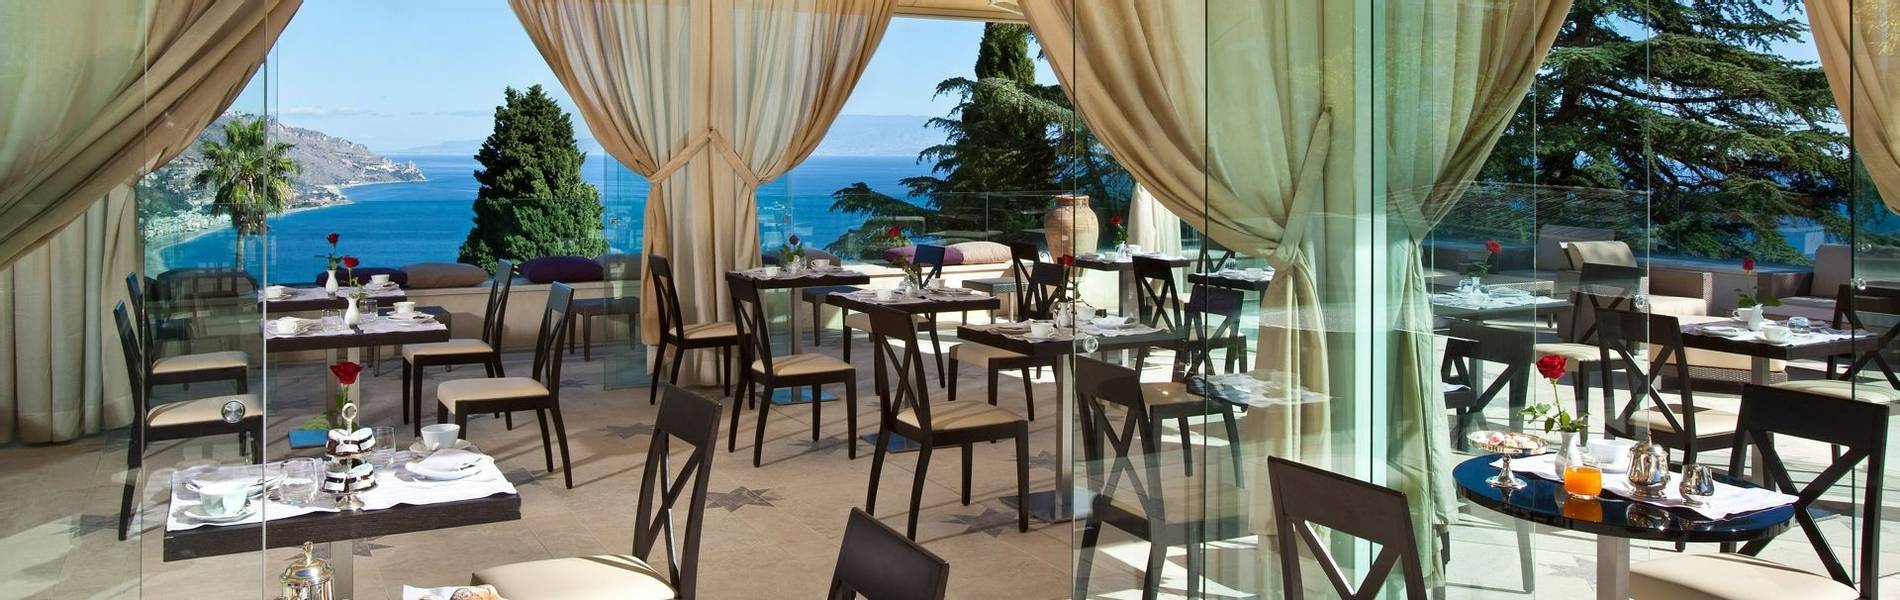 Ashbee Hotel, Sicily, Italy (10).jpg